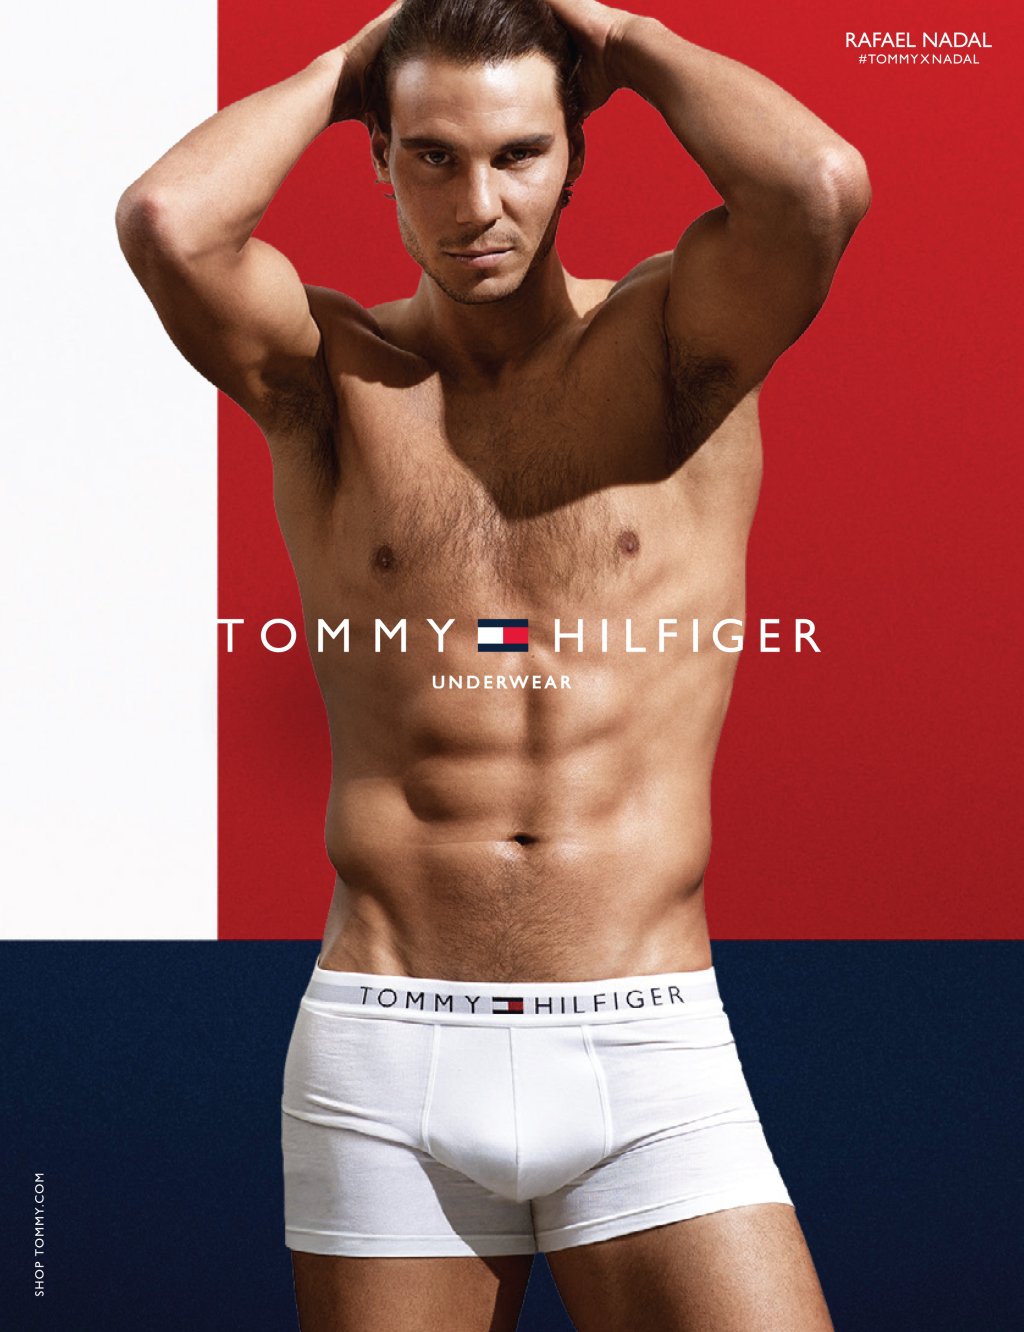 Rafael-Nadal-Tommy-Hilfiger-Underwear-2015-Campaign-Shoot-003